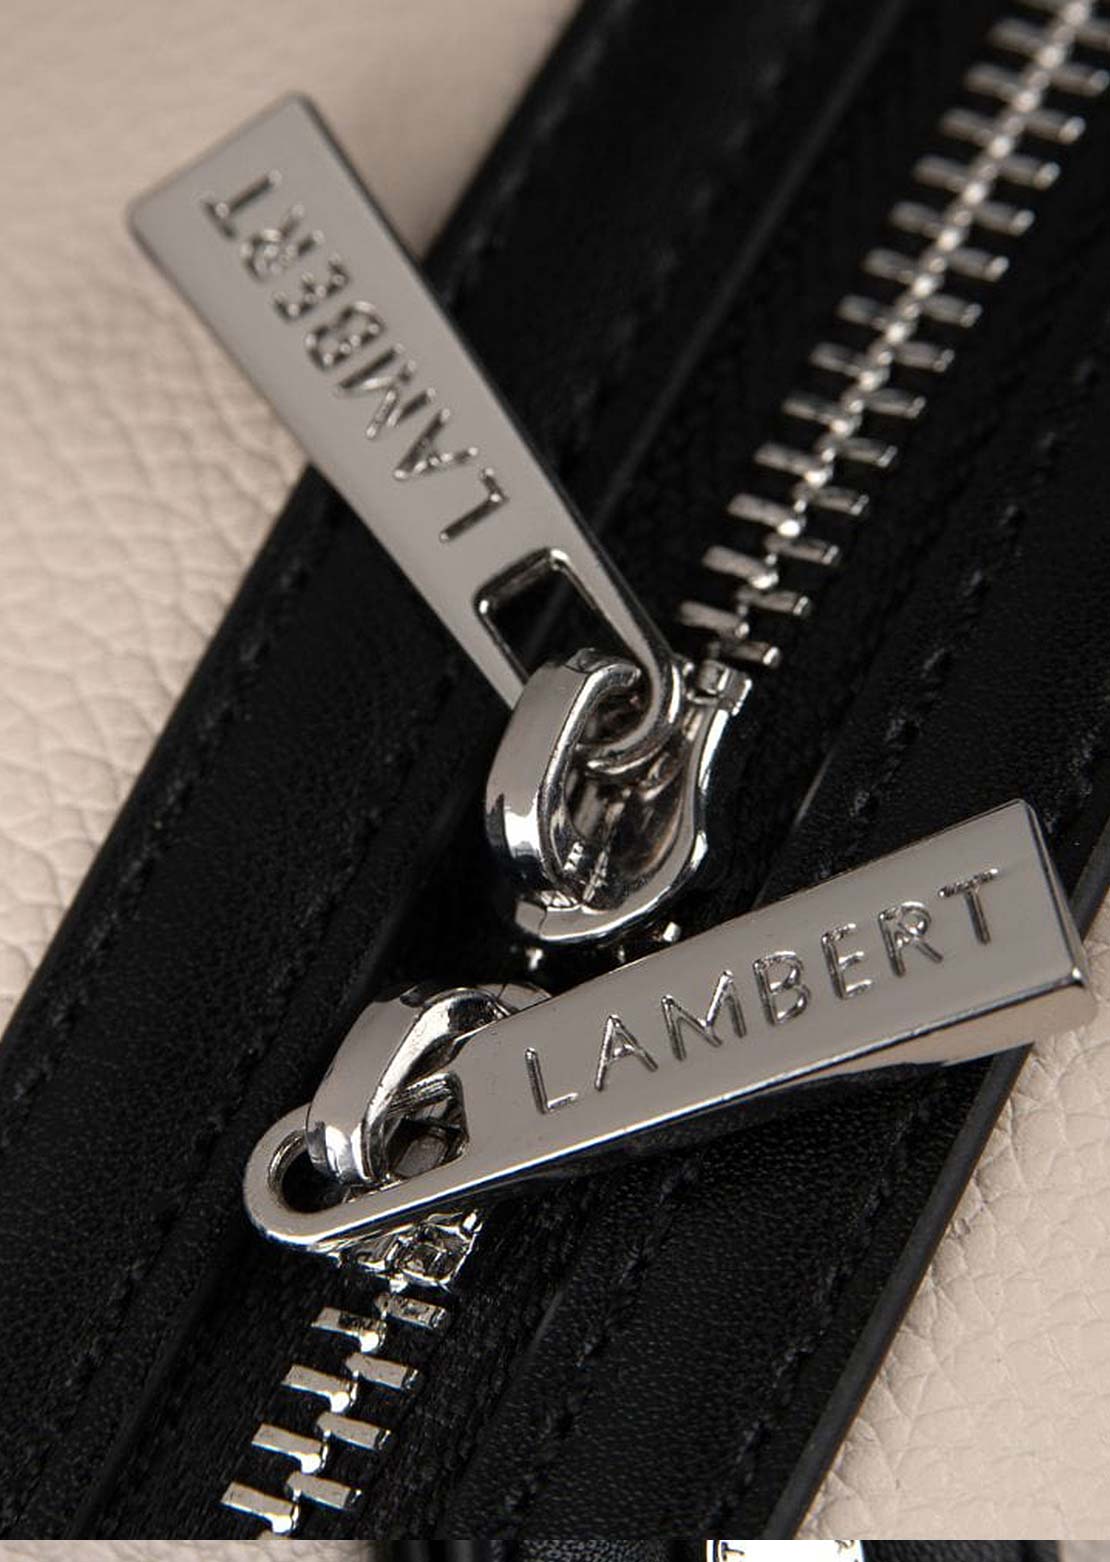 Lambert Women&#39;s June Vegan Leather Travel Tote Bag Oystermix Pebble